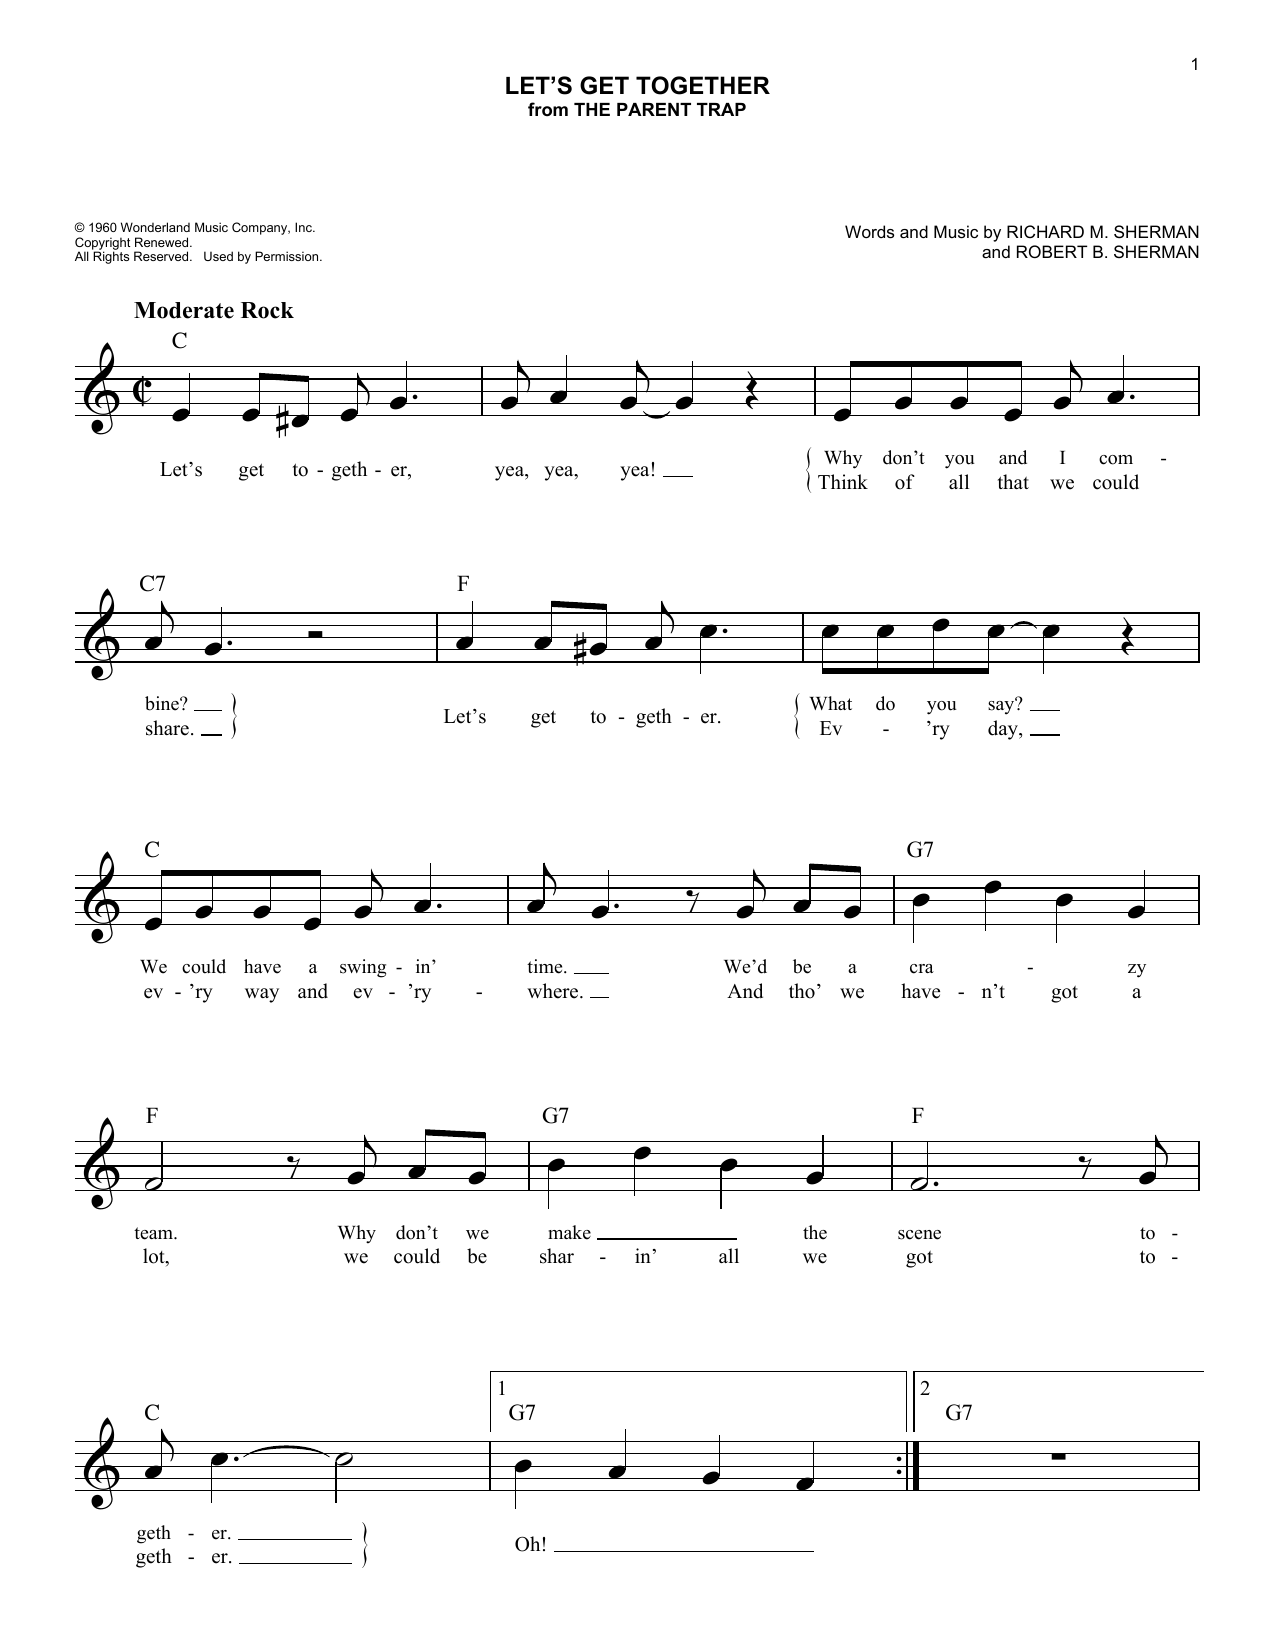 Richard M. Sherman Let's Get Together Sheet Music Notes & Chords for Melody Line, Lyrics & Chords - Download or Print PDF